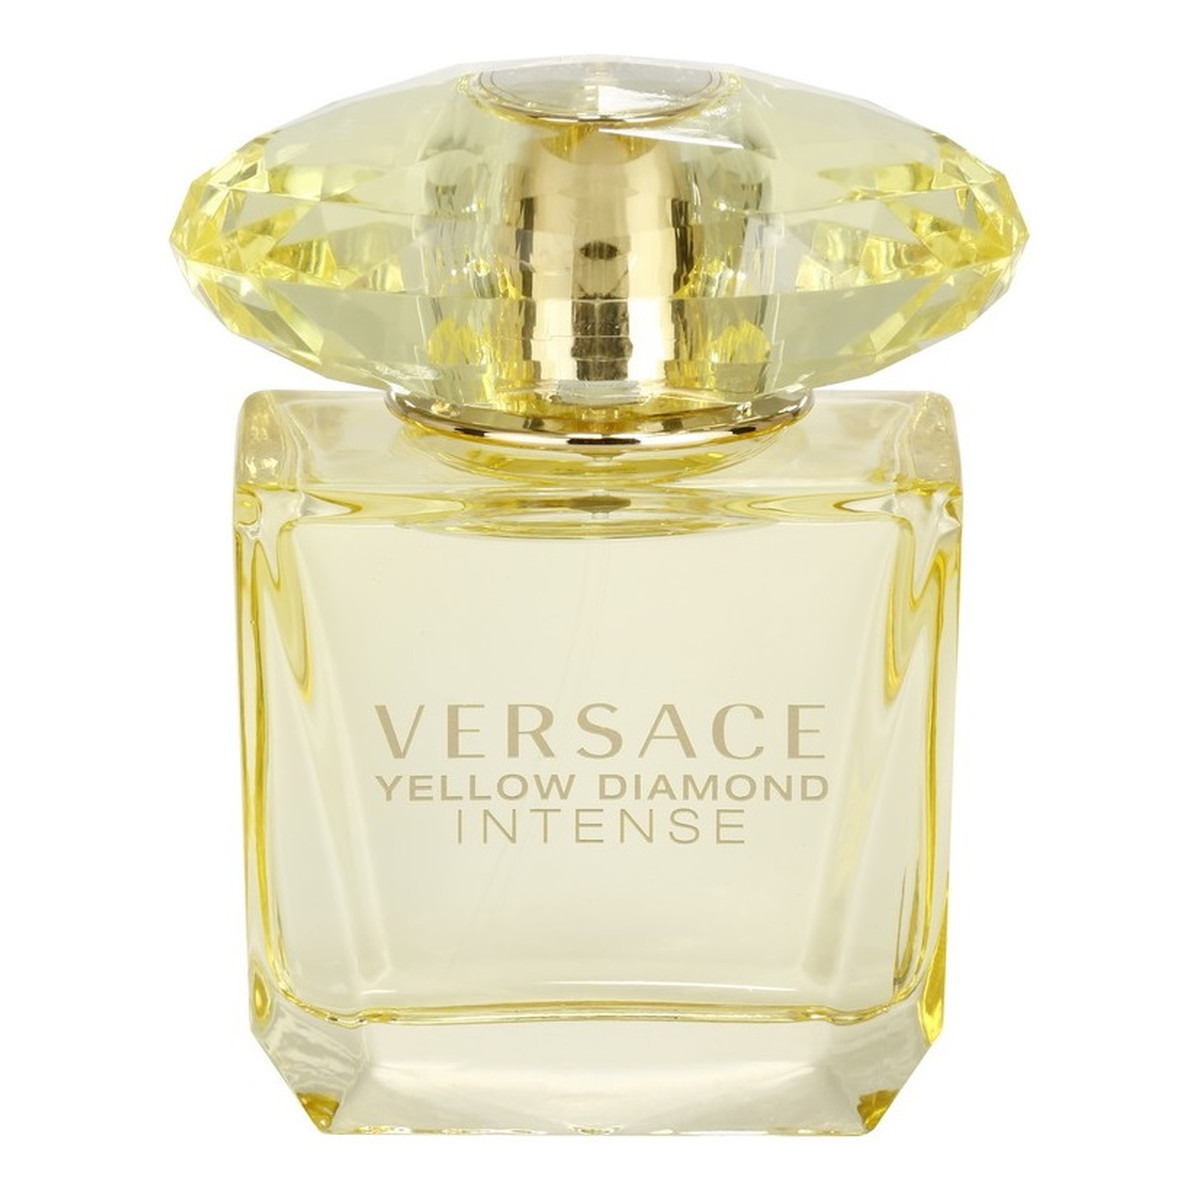 Versace Yellow Diamond Intense woda perfumowana dla kobiet 30ml